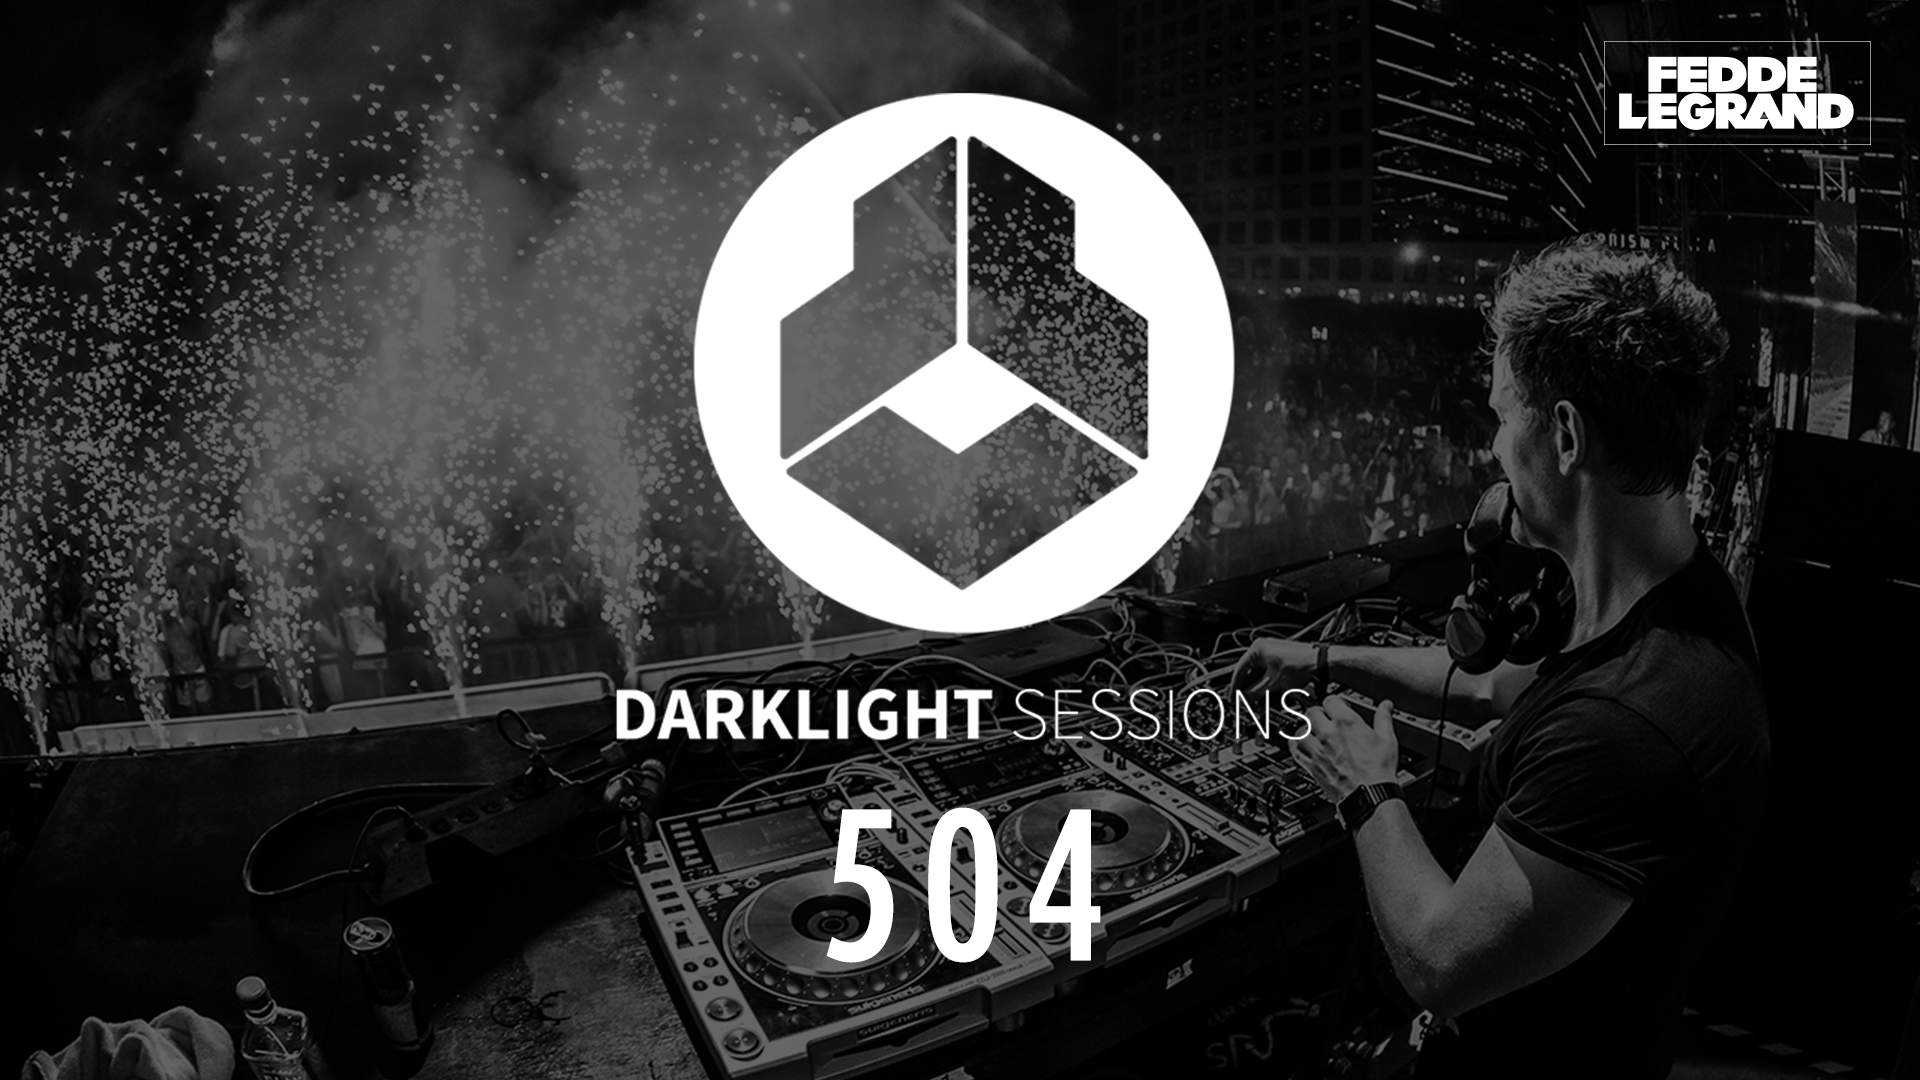 Darklight Sessions 504